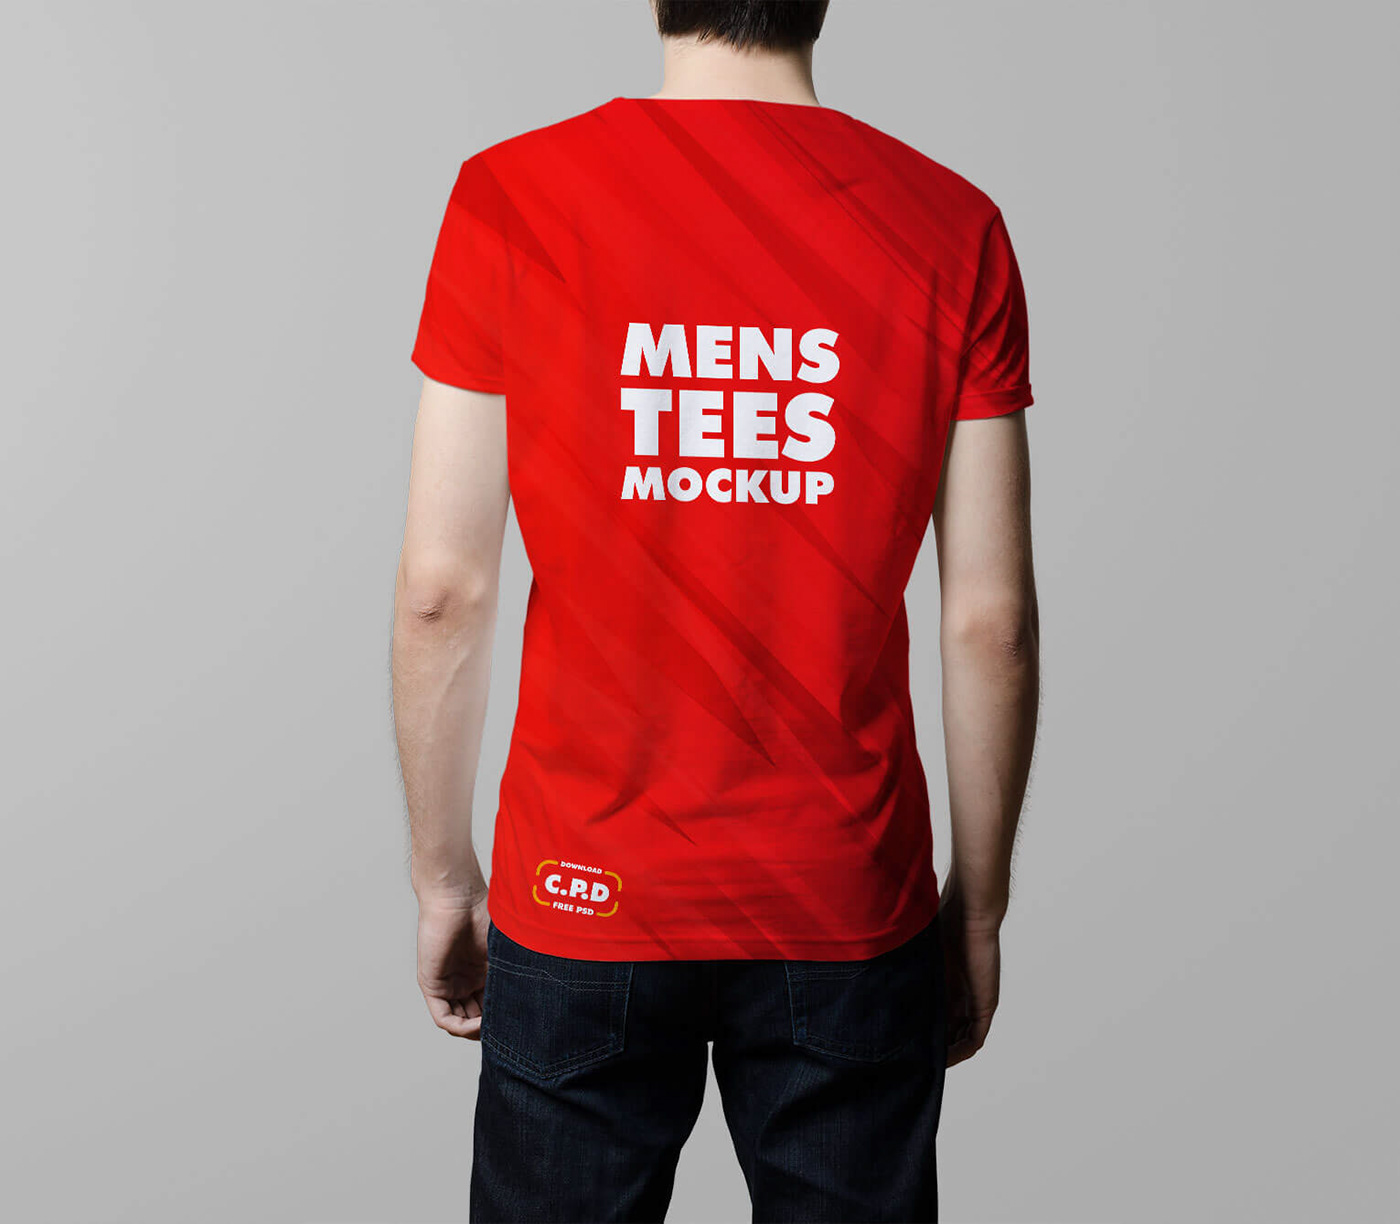 Download V-Neck Male T-Shirt Mockup Free Psd on Behance